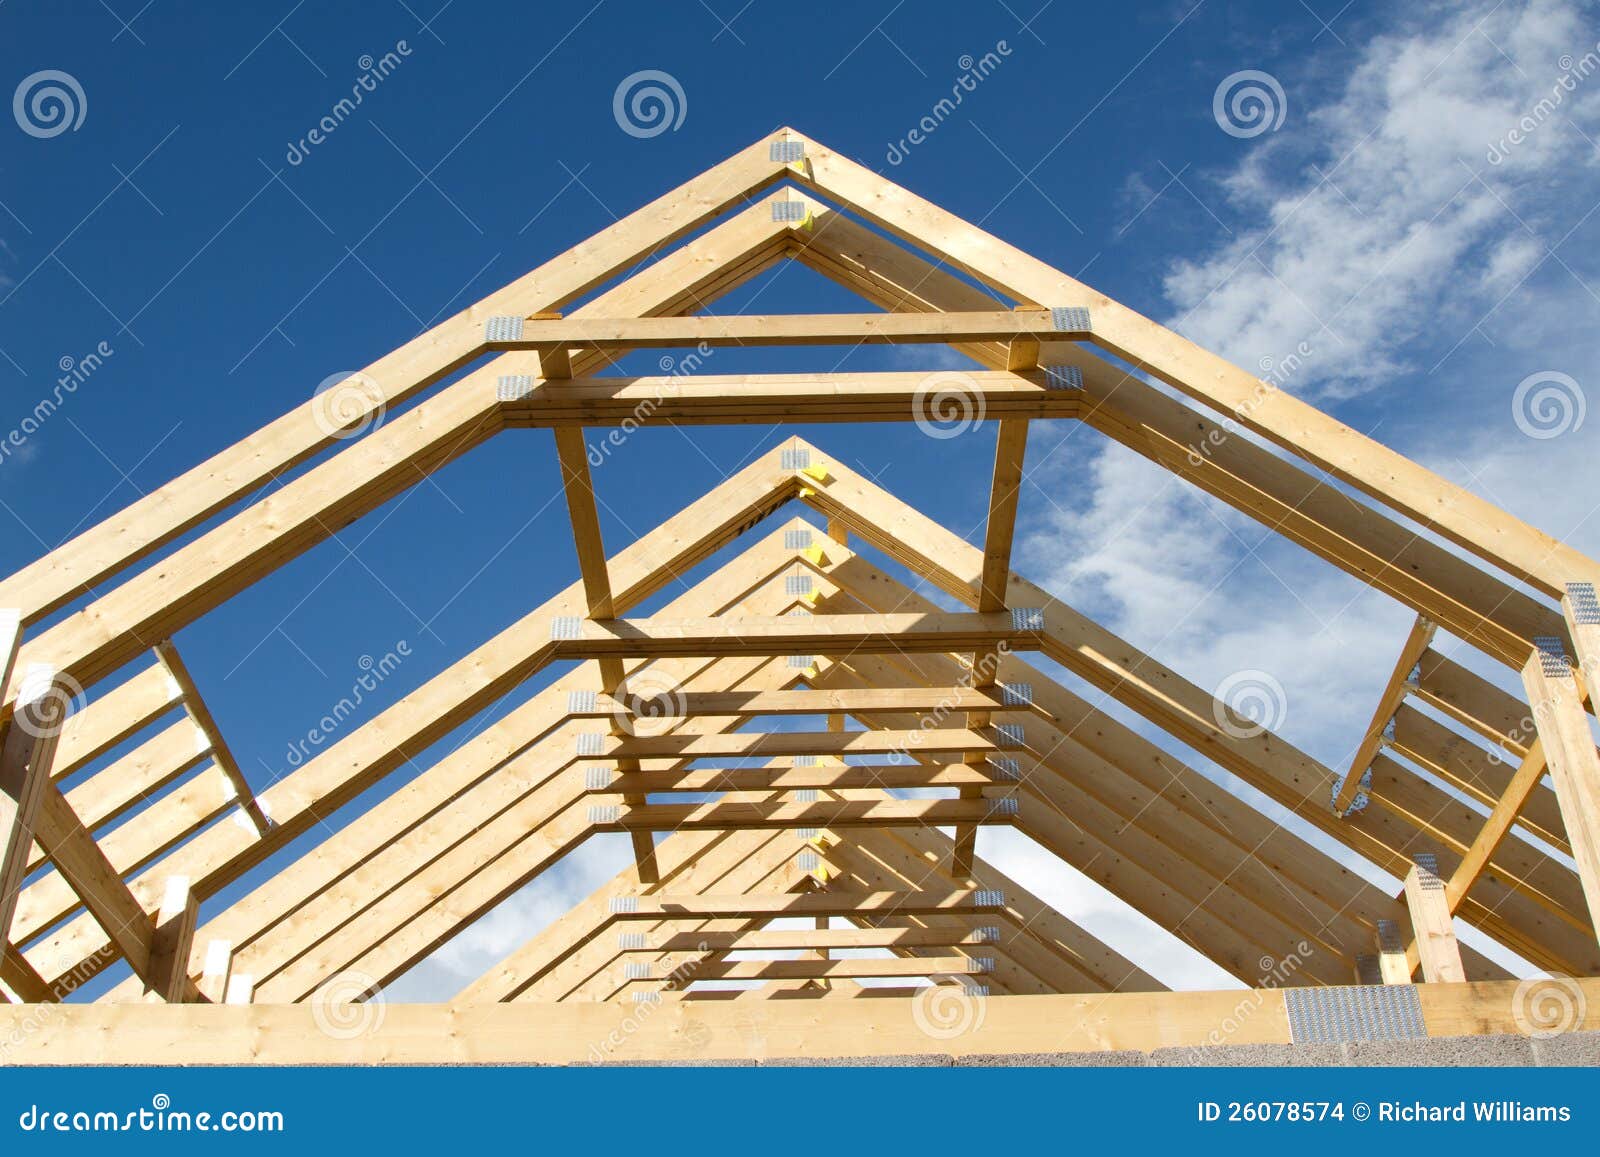 Build Roof Trusses